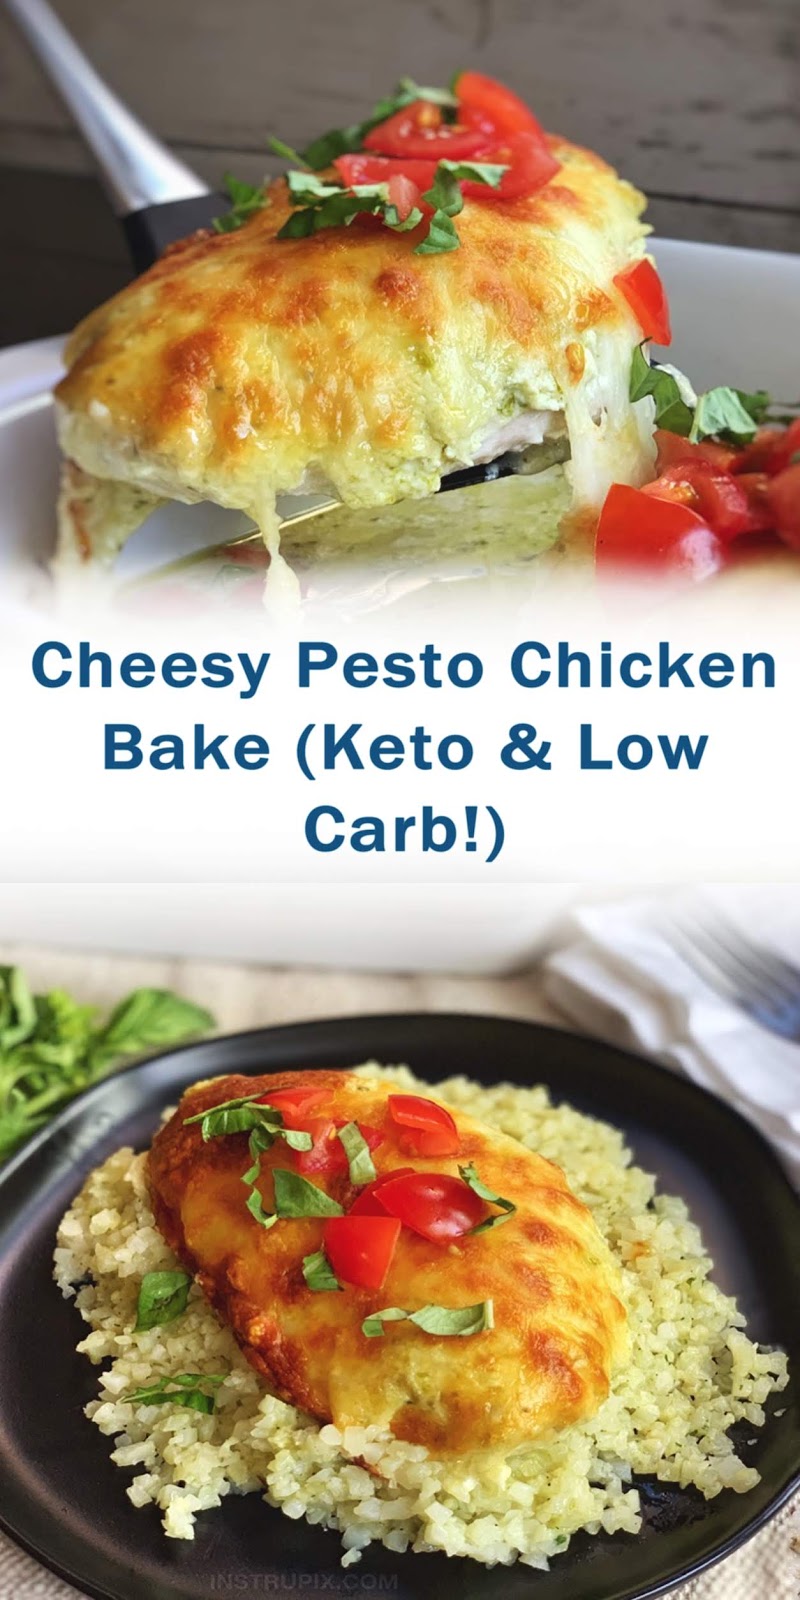 Cheesy Pesto Chicken Bake (Keto & Low Carb!)